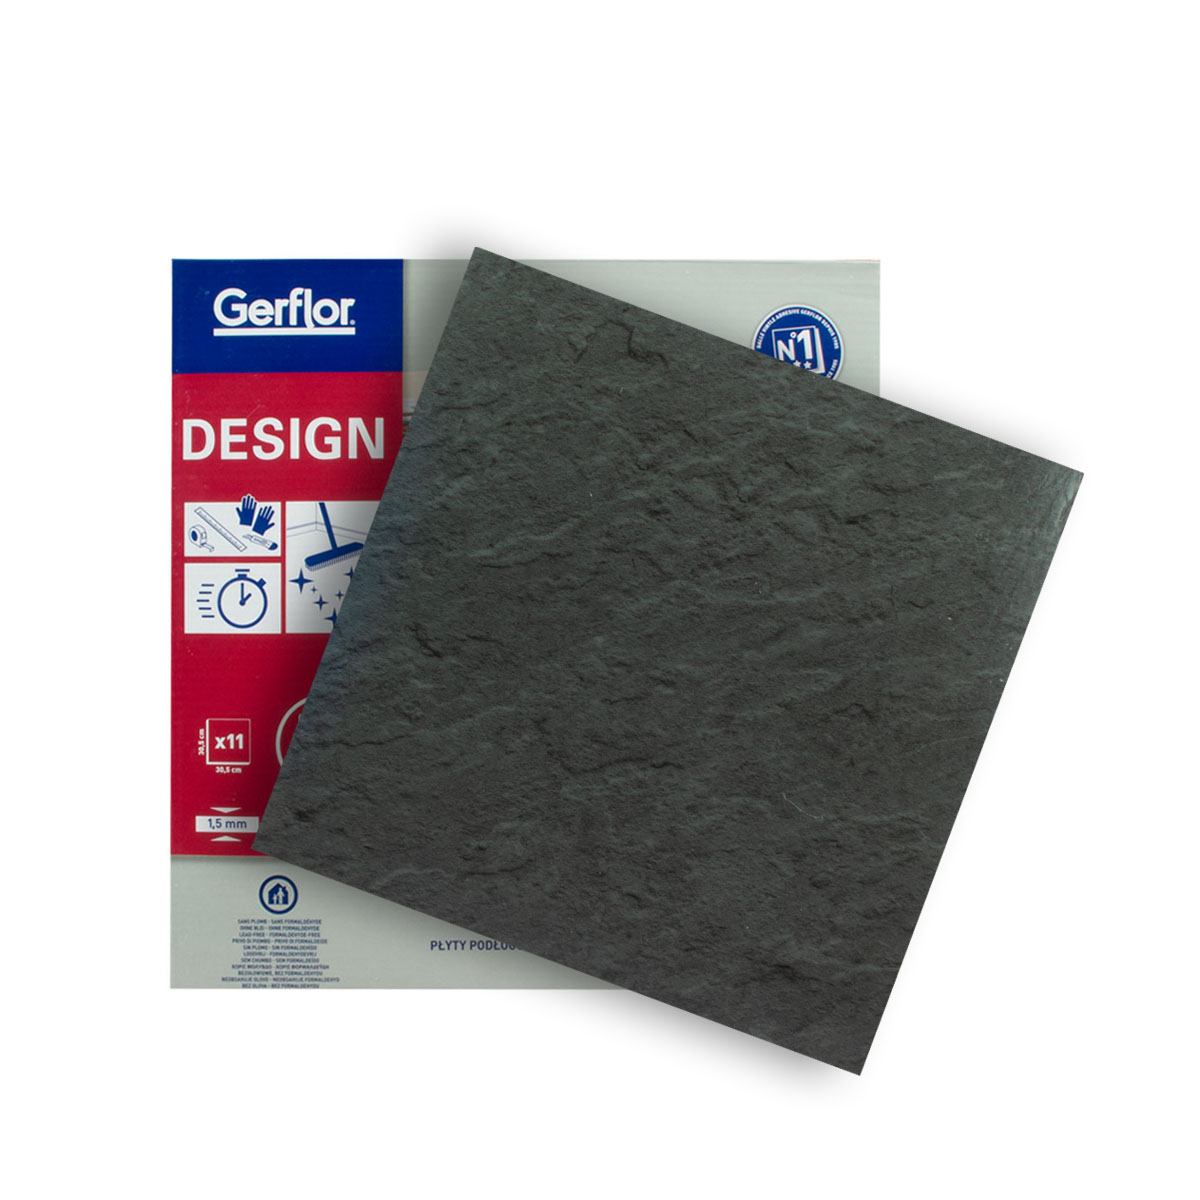 Gerflor Vinyl Design Fliese 0220 Slate Anthracite 1qm, selbstklebend